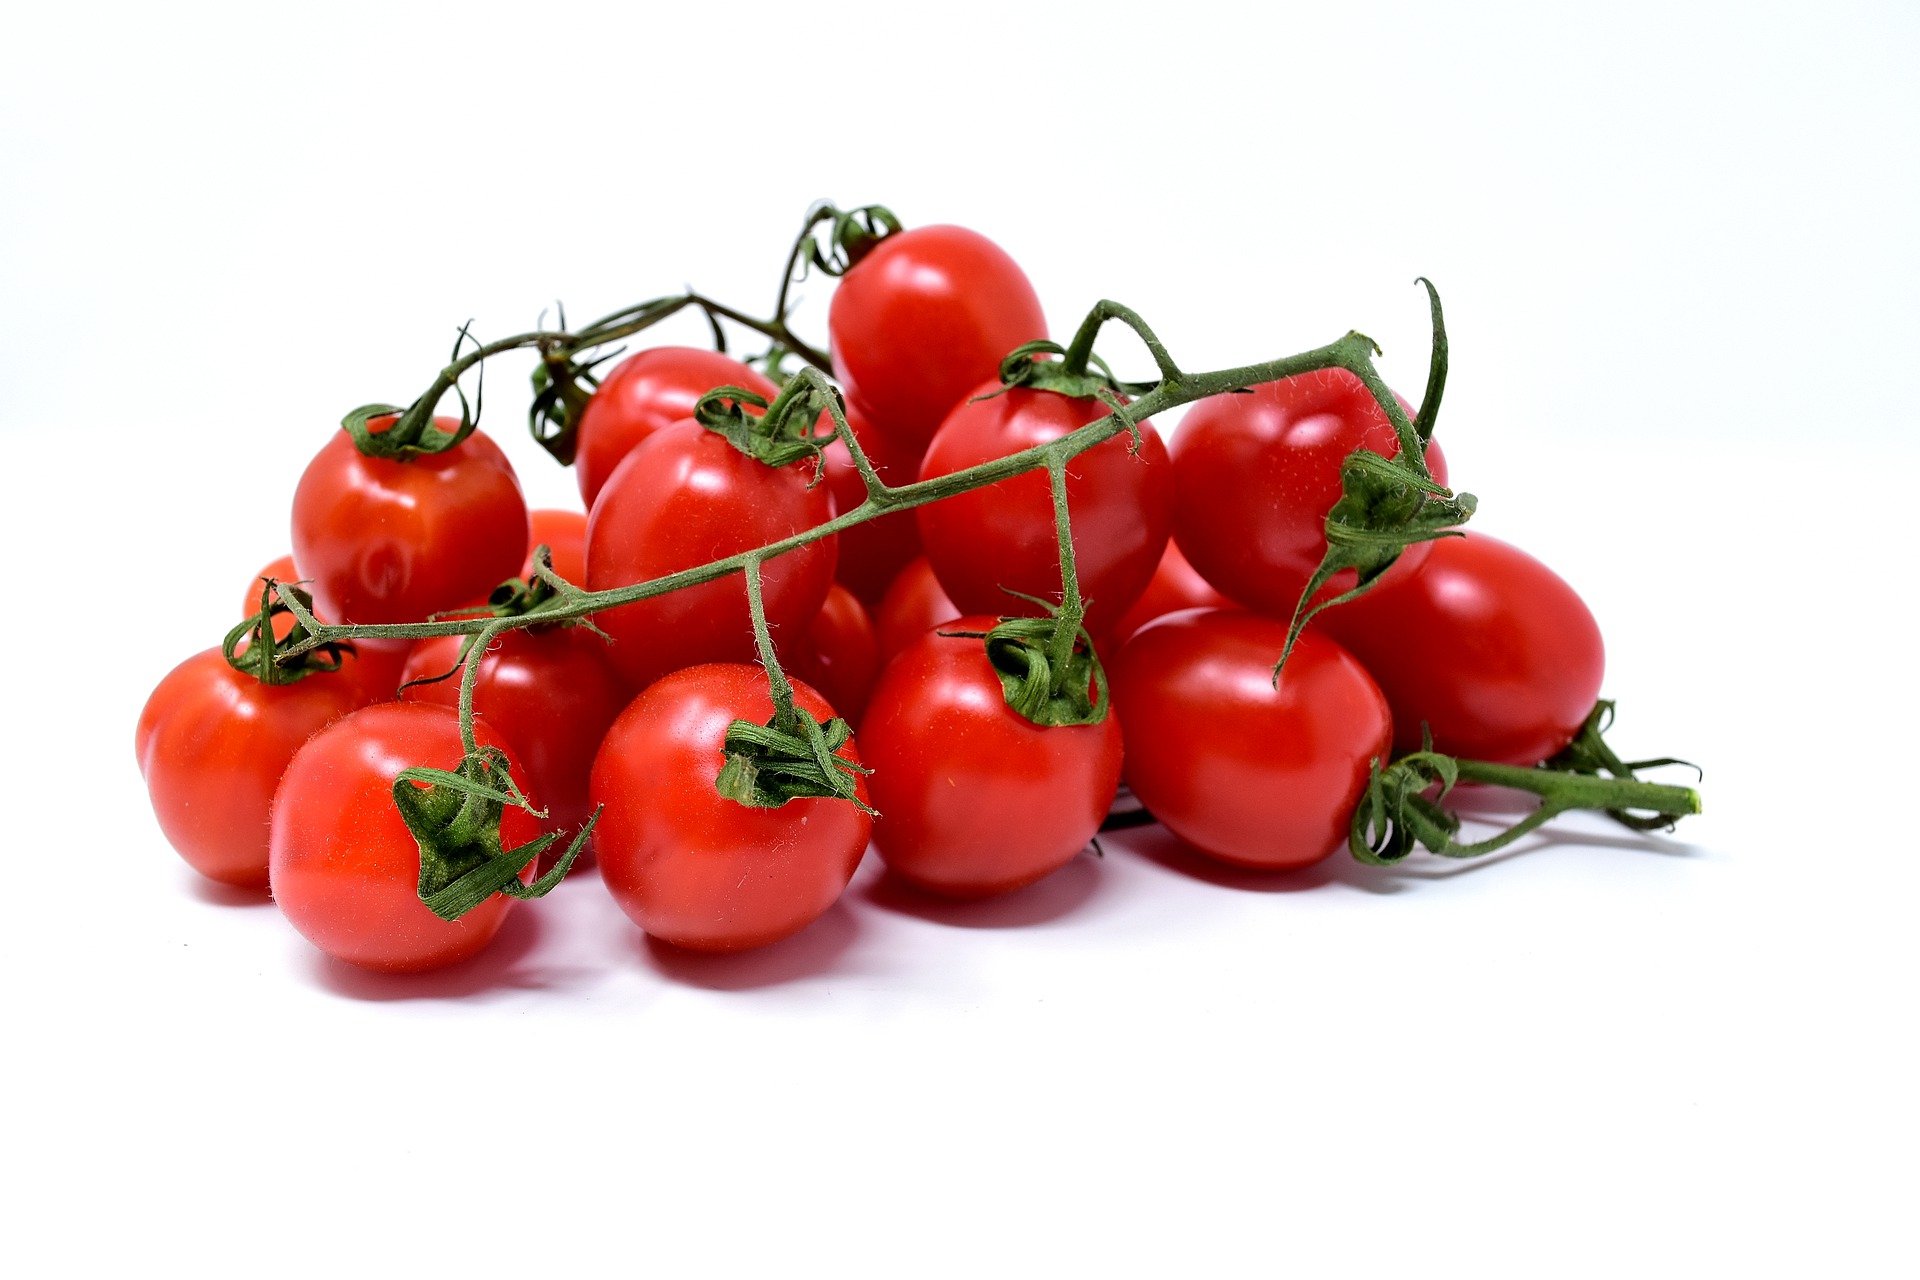 Tomatoes are a juglone sensitive crop